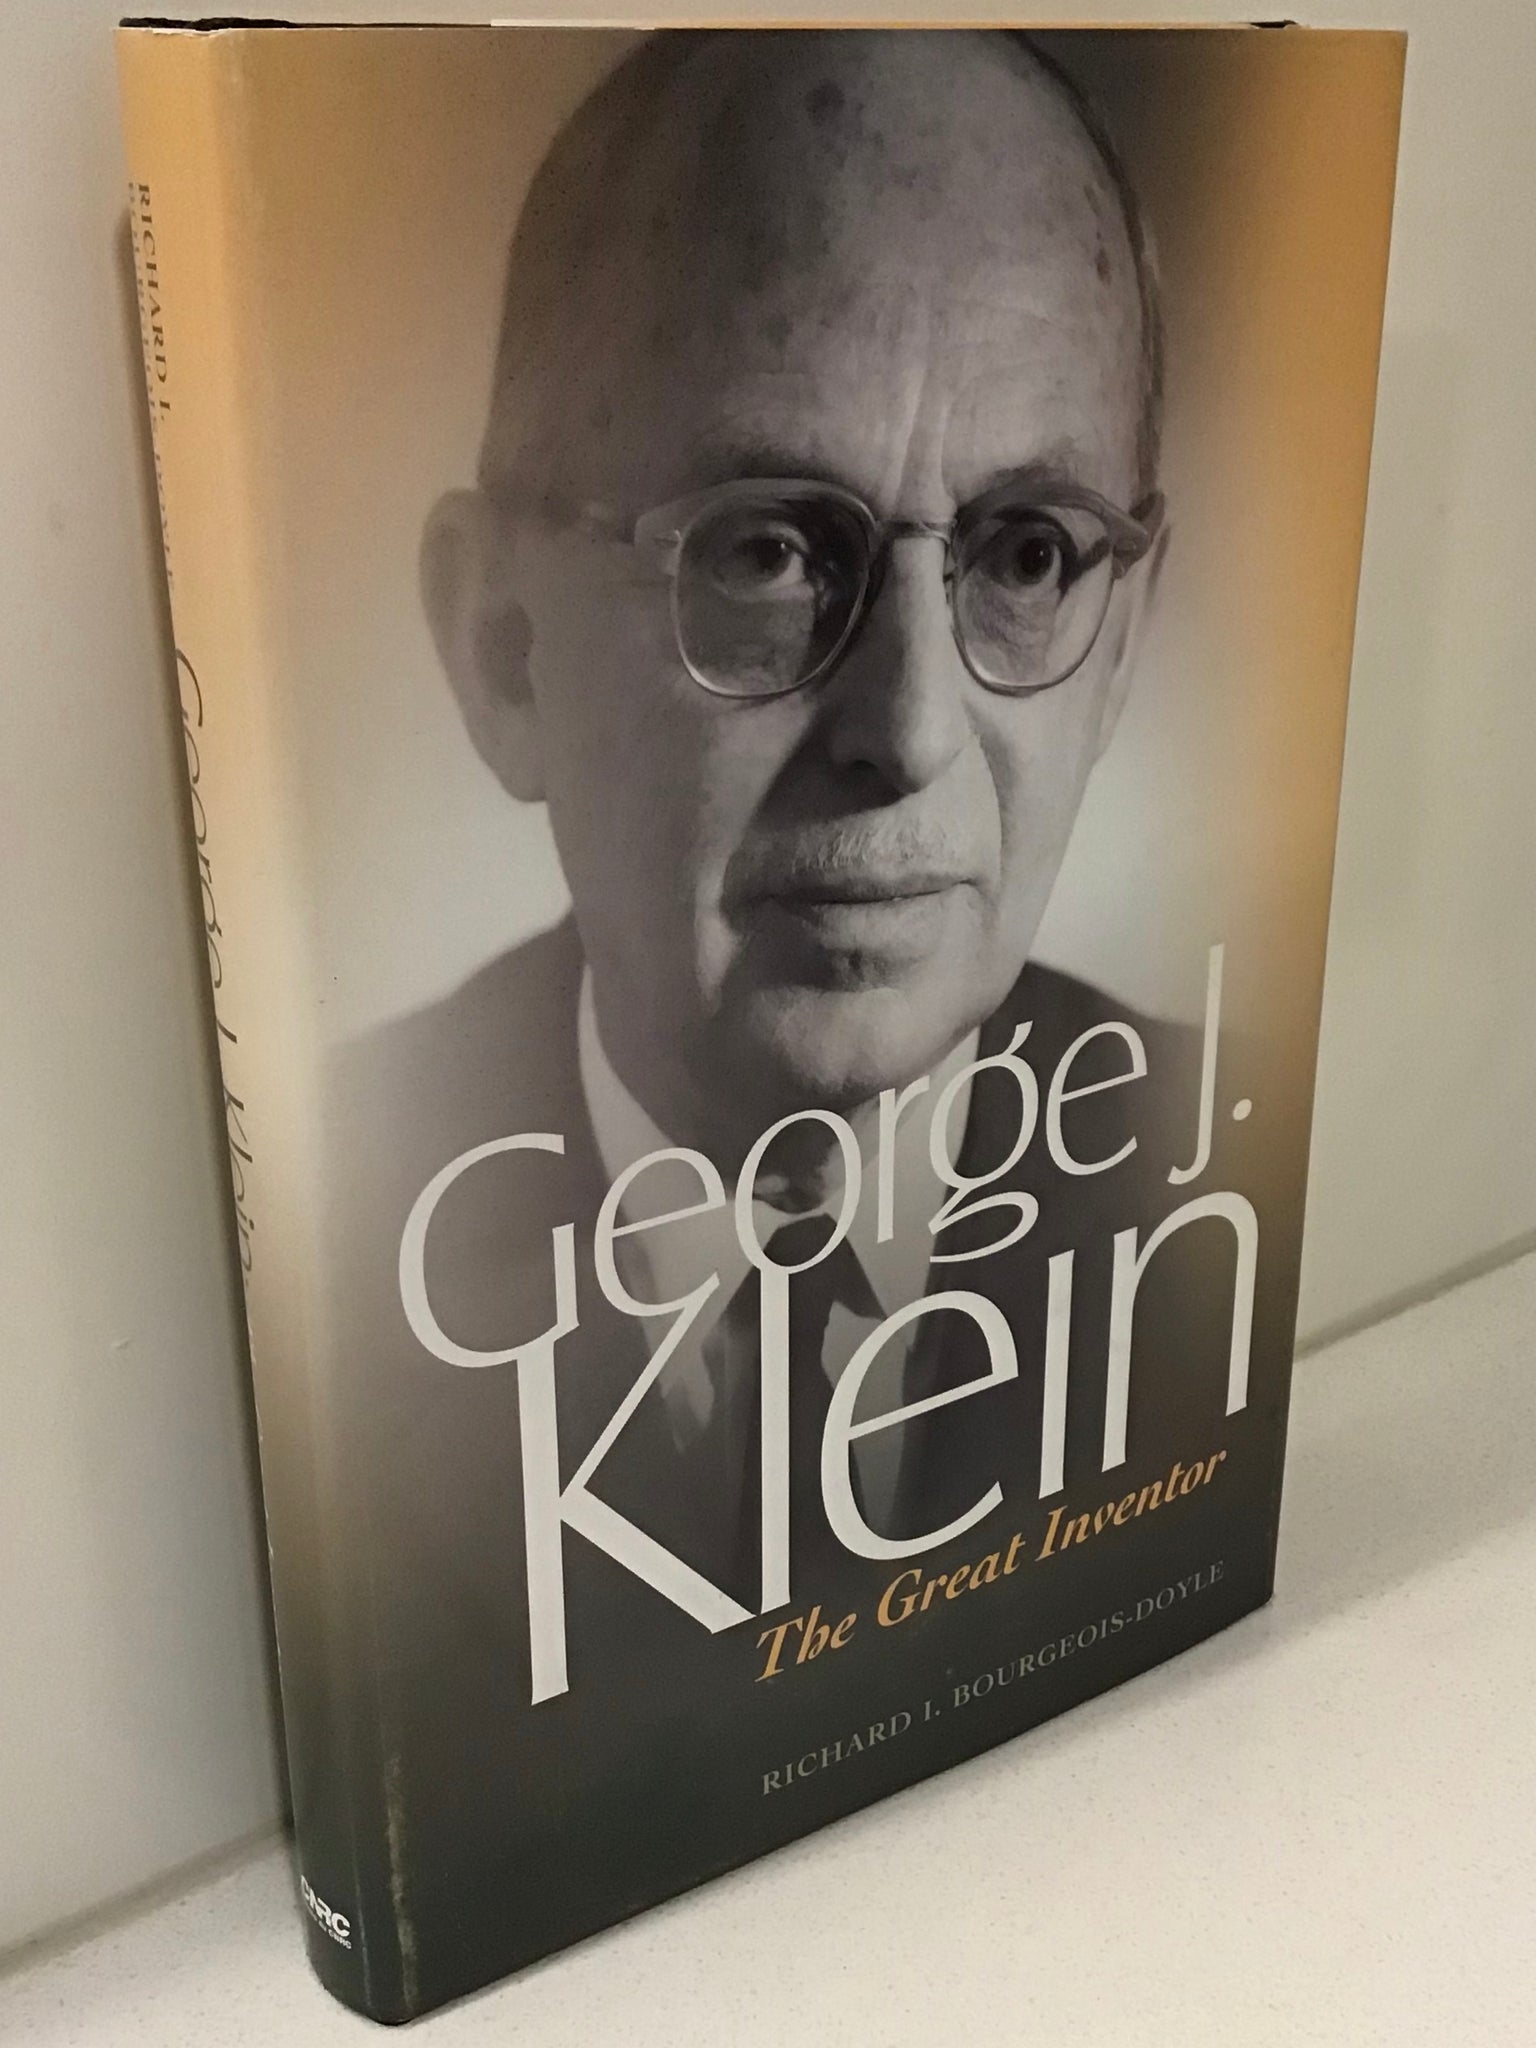 George J. Klein: The Great Inventor